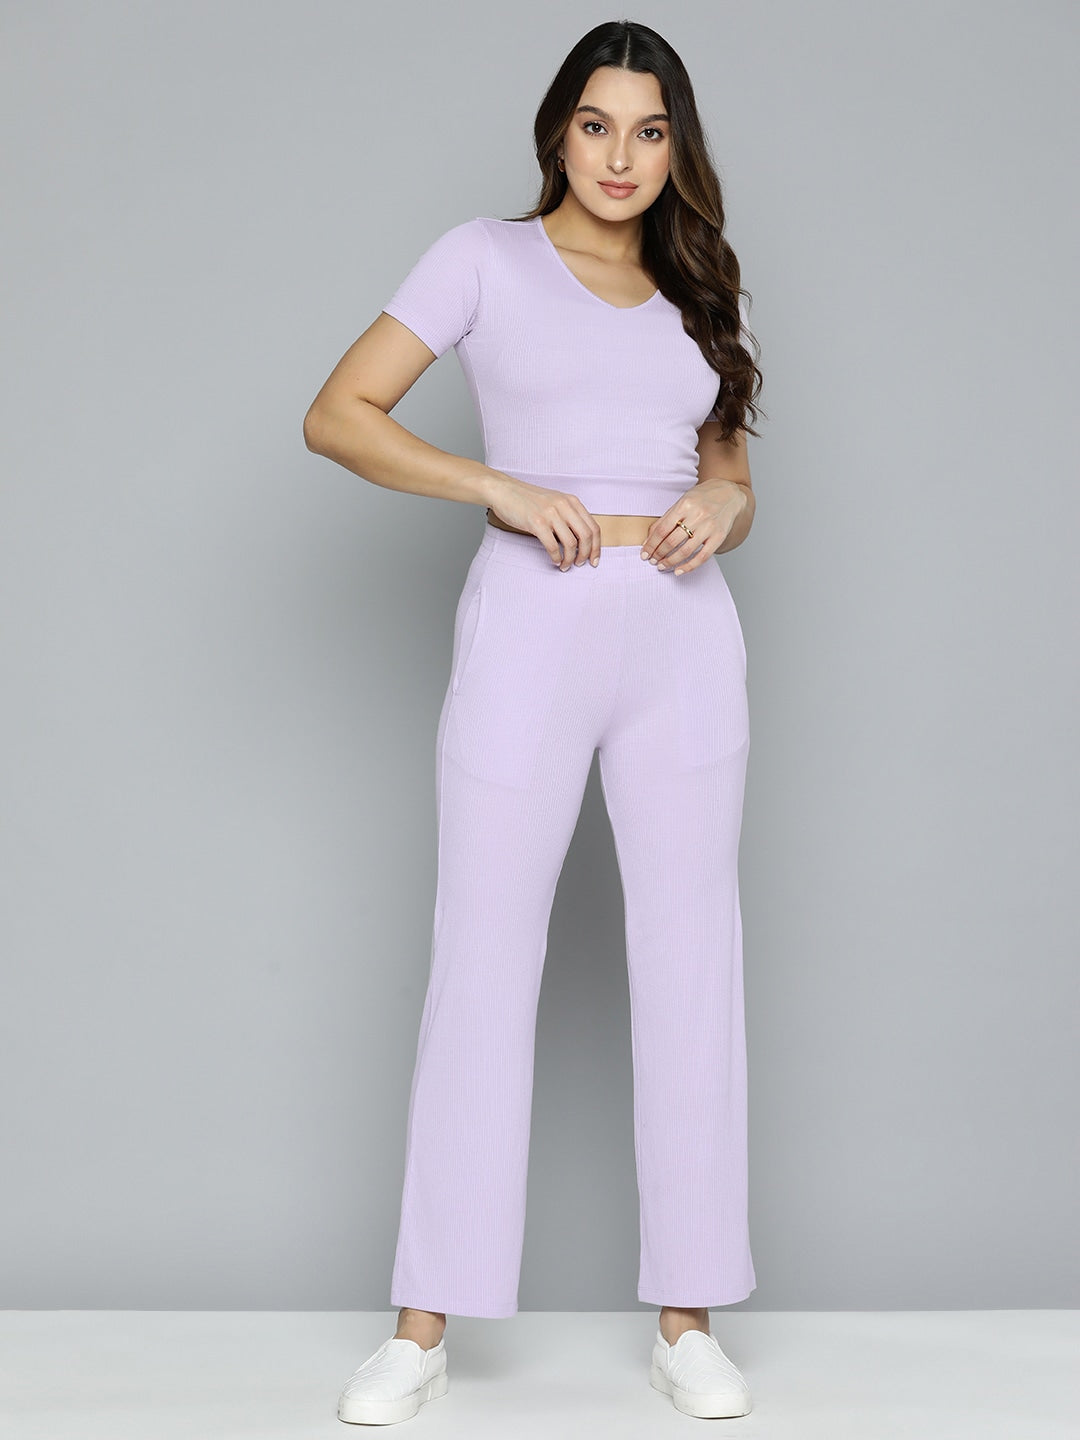 Full Sleeve Ladies Cotton Crop Top Pant Set Plain Beige And Pink